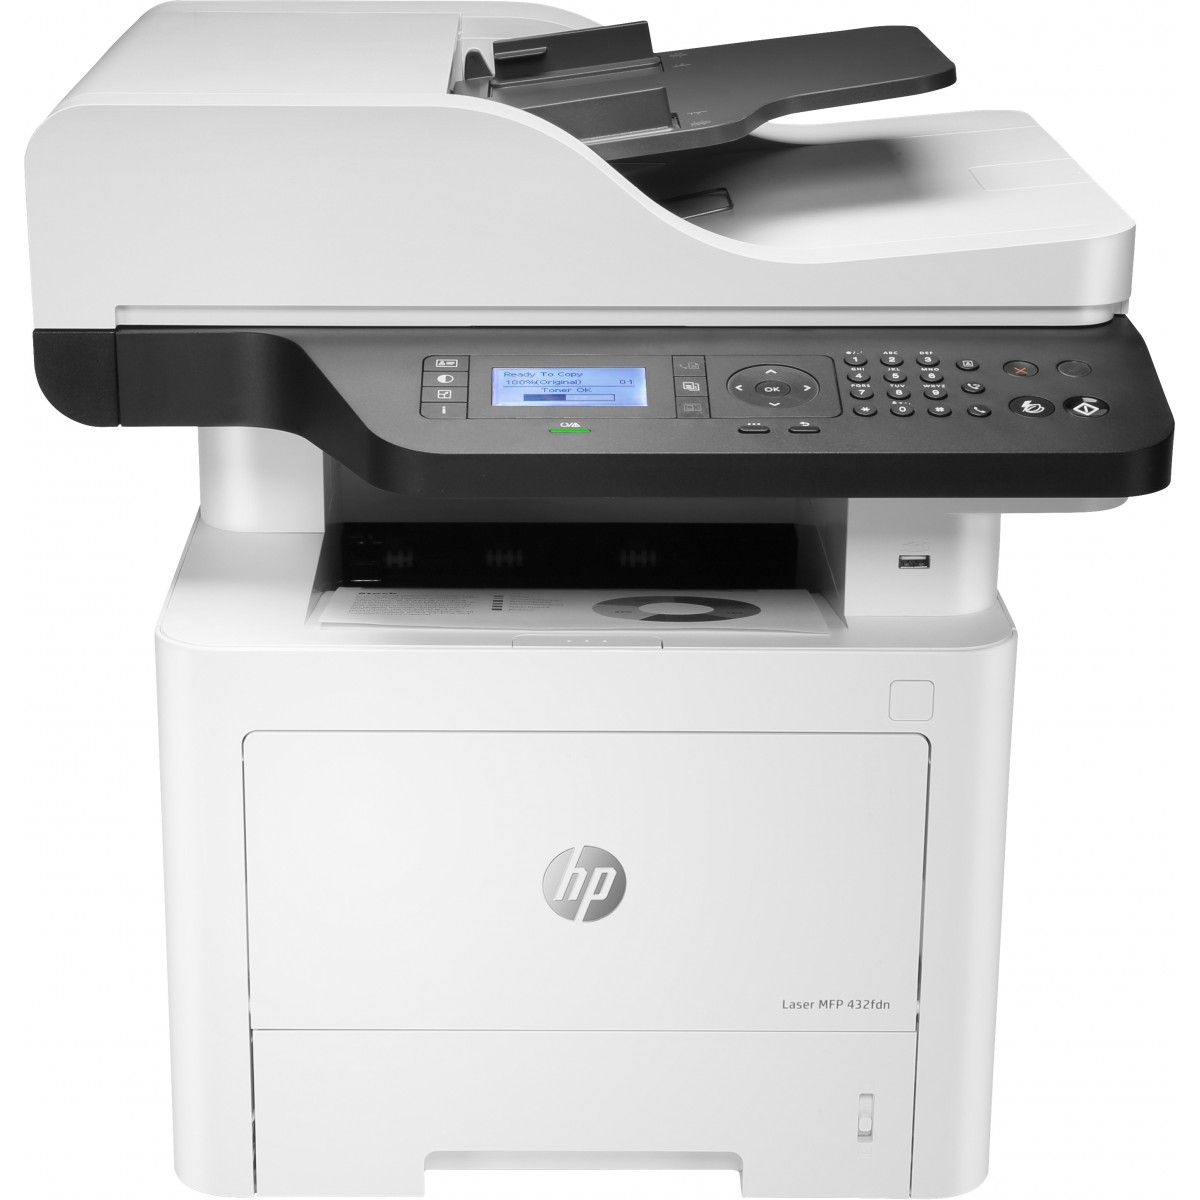 HP Laser 432fdn - Laser - Mono printing - 1200 x 1200 DPI - A4 - Direct printing - Black - White